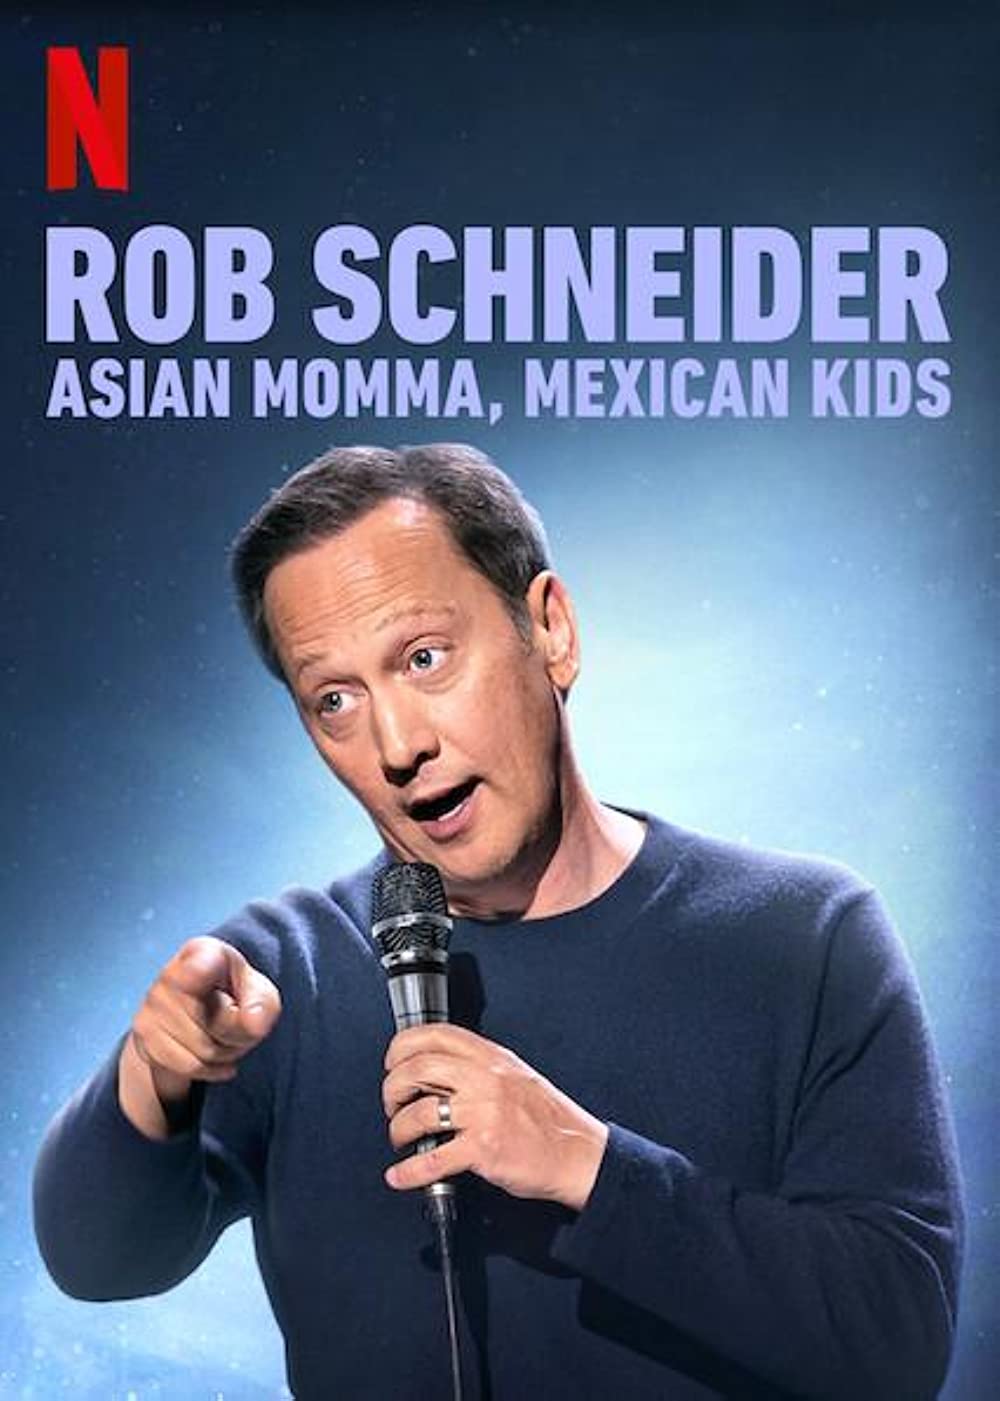 Filmbeschreibung zu Rob Schneider: Asian Momma, Mexican Kids